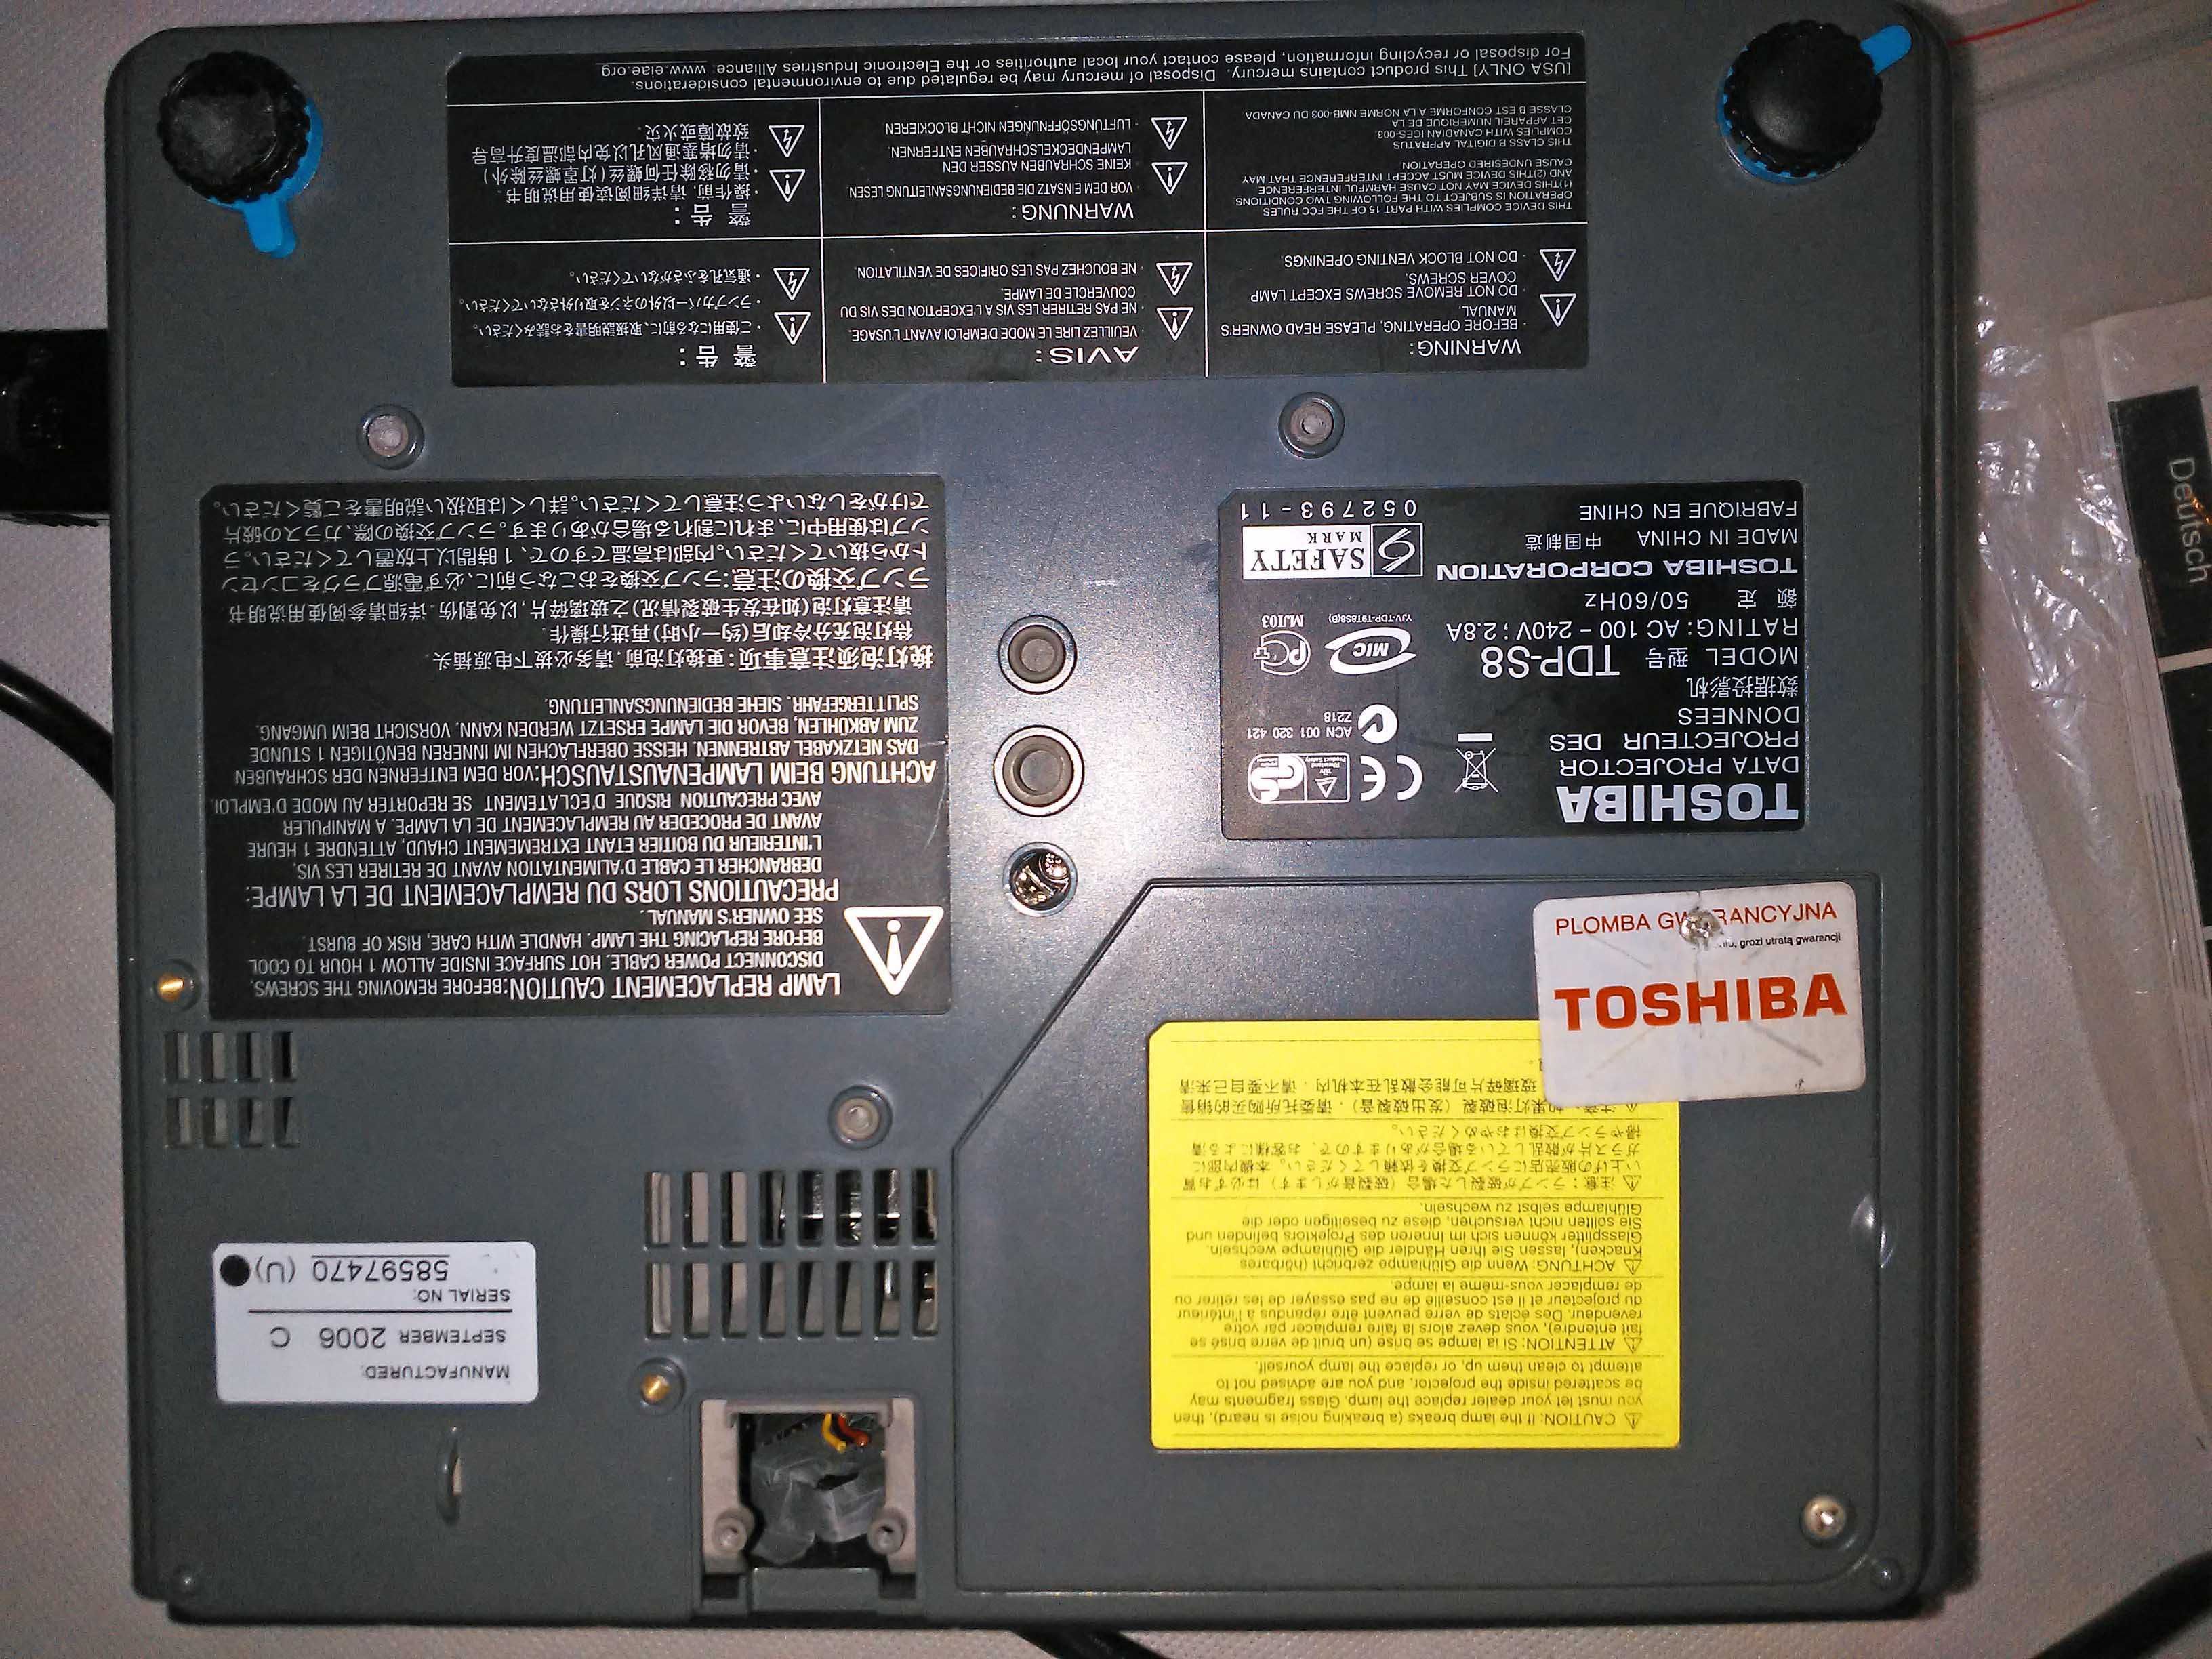 Projektor Toshiba TDP-S8